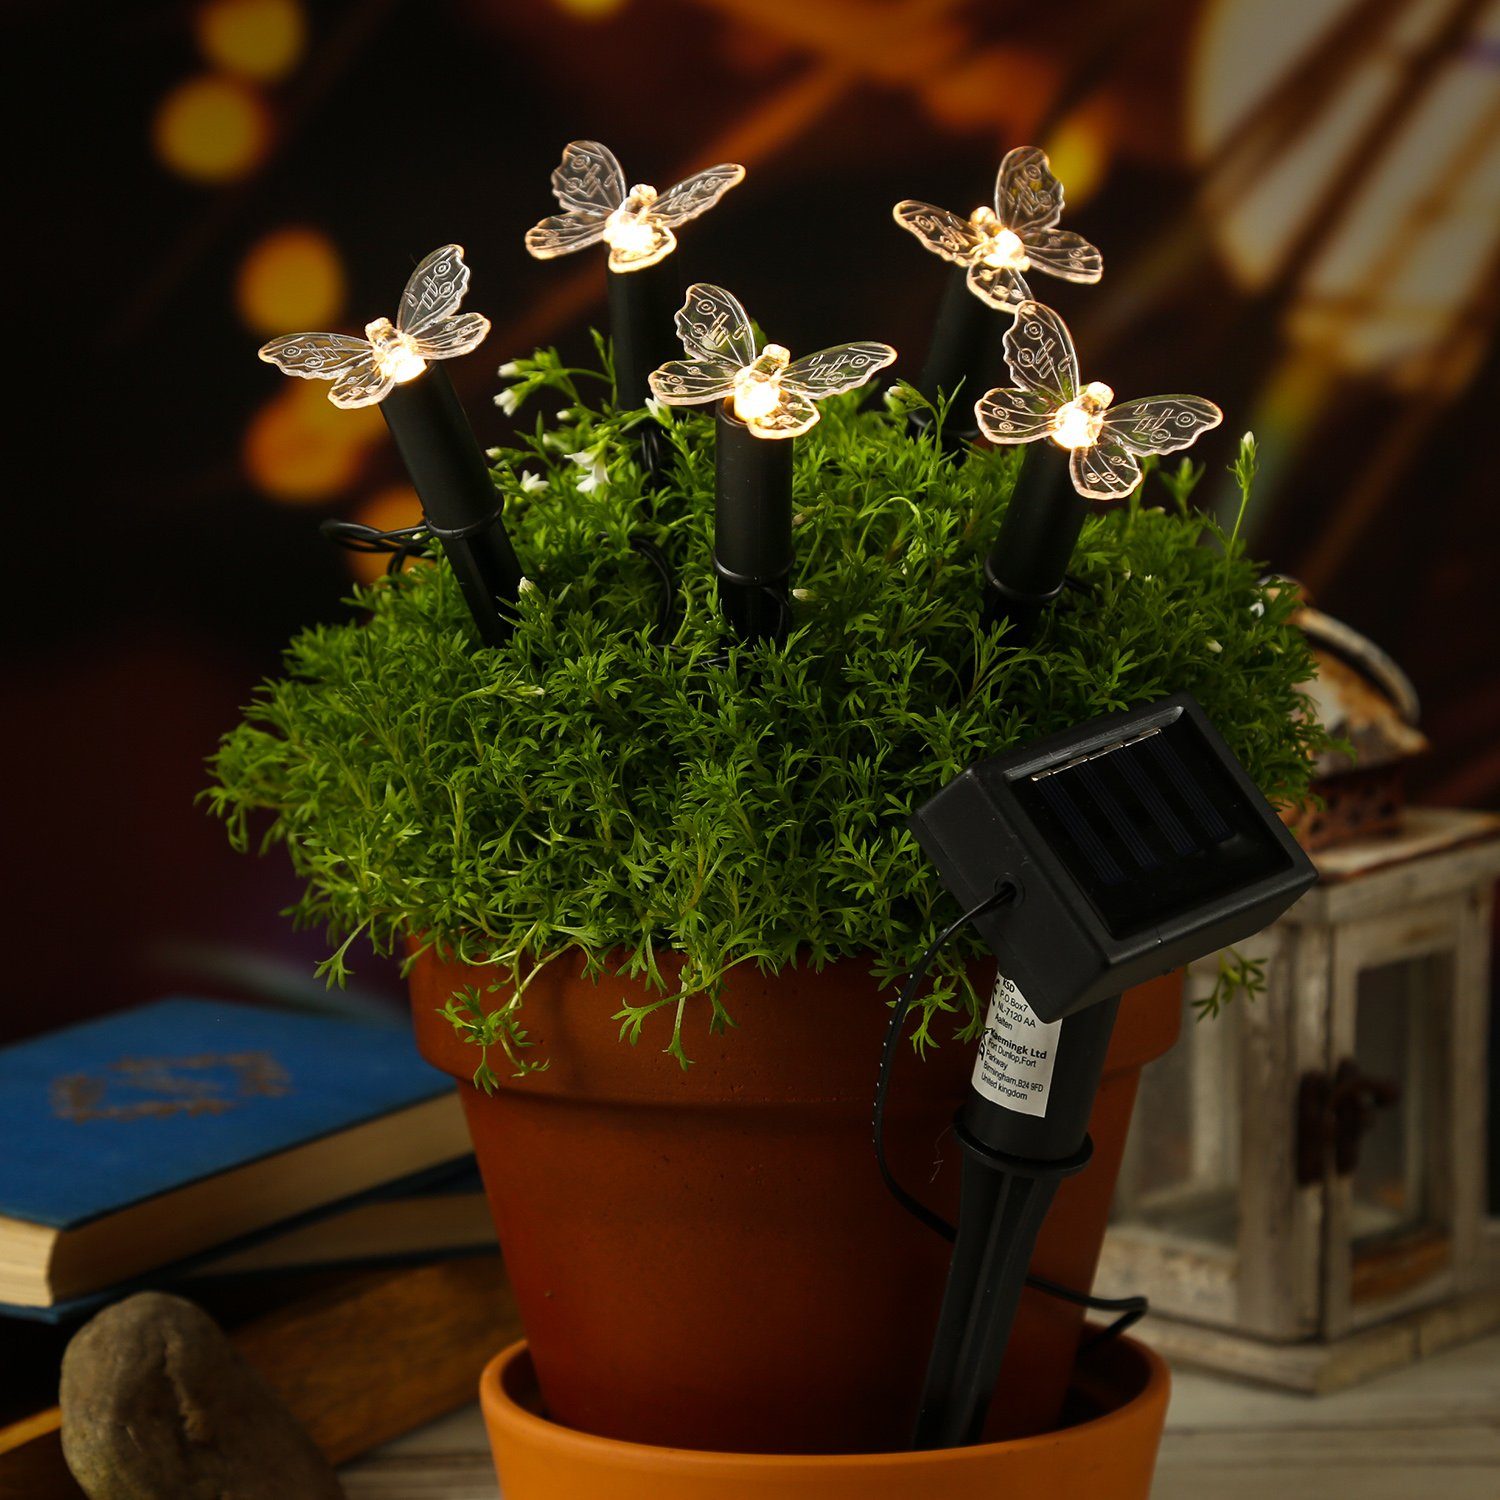 Beetstecker (2100K Schmetterlinge LED 3000K) Blumentopfdeko, warmweiß LED Solar Lichterkette Solarleuchte Classic, MARELIDA bis LED